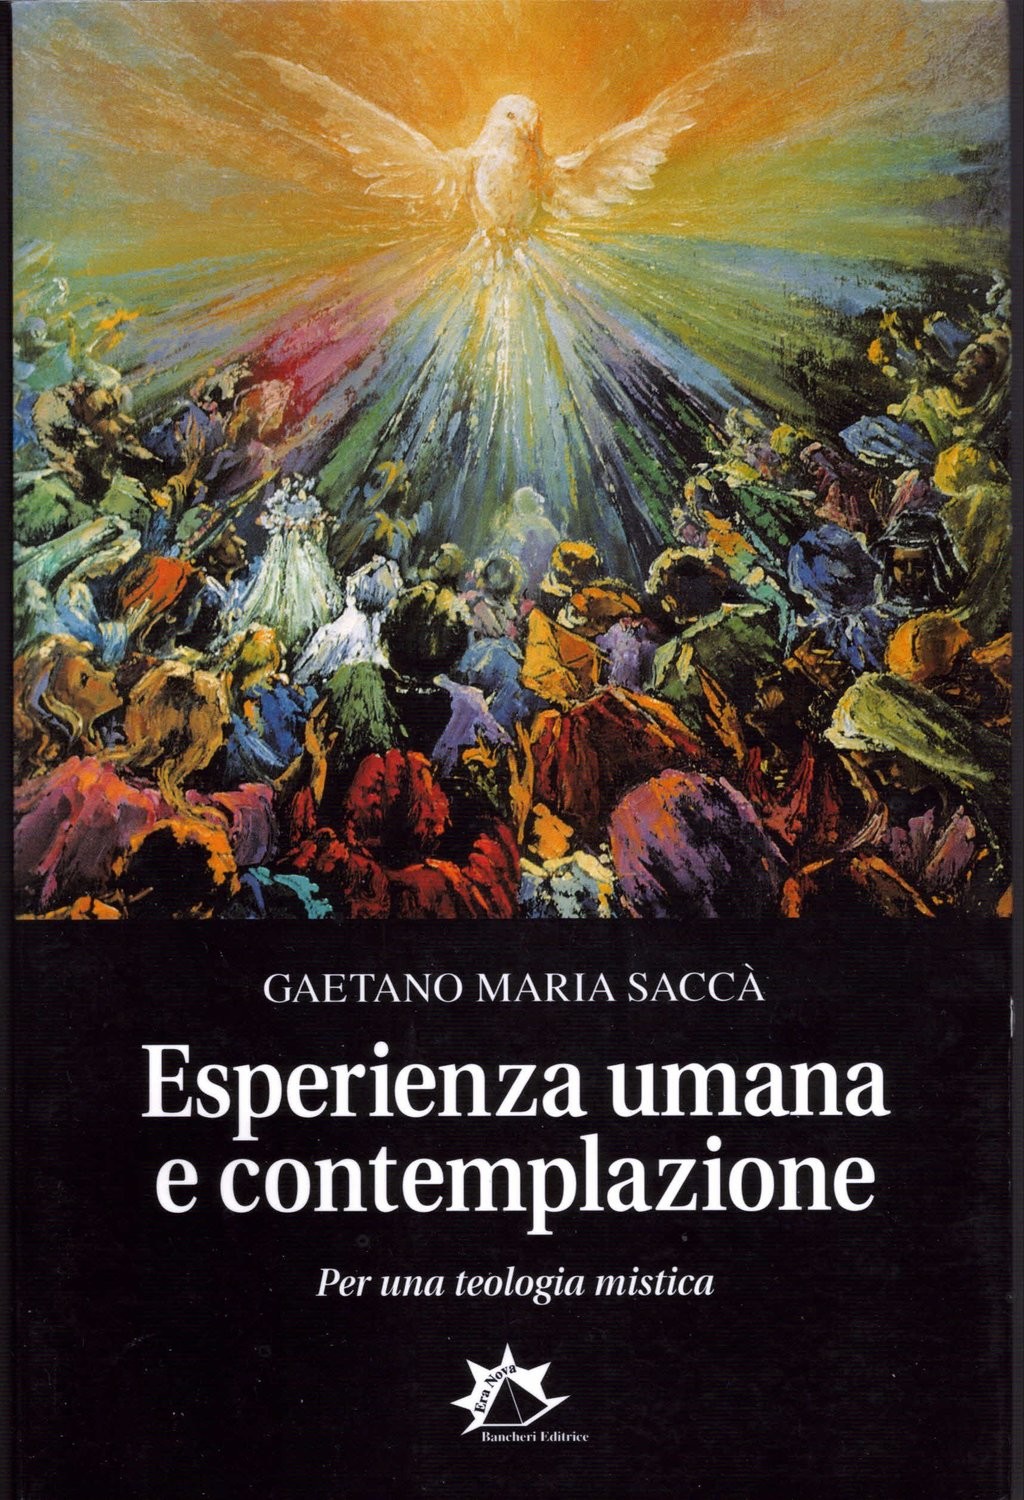 Esperienza umana e contemplazione.
Gaetano Maria Saccà